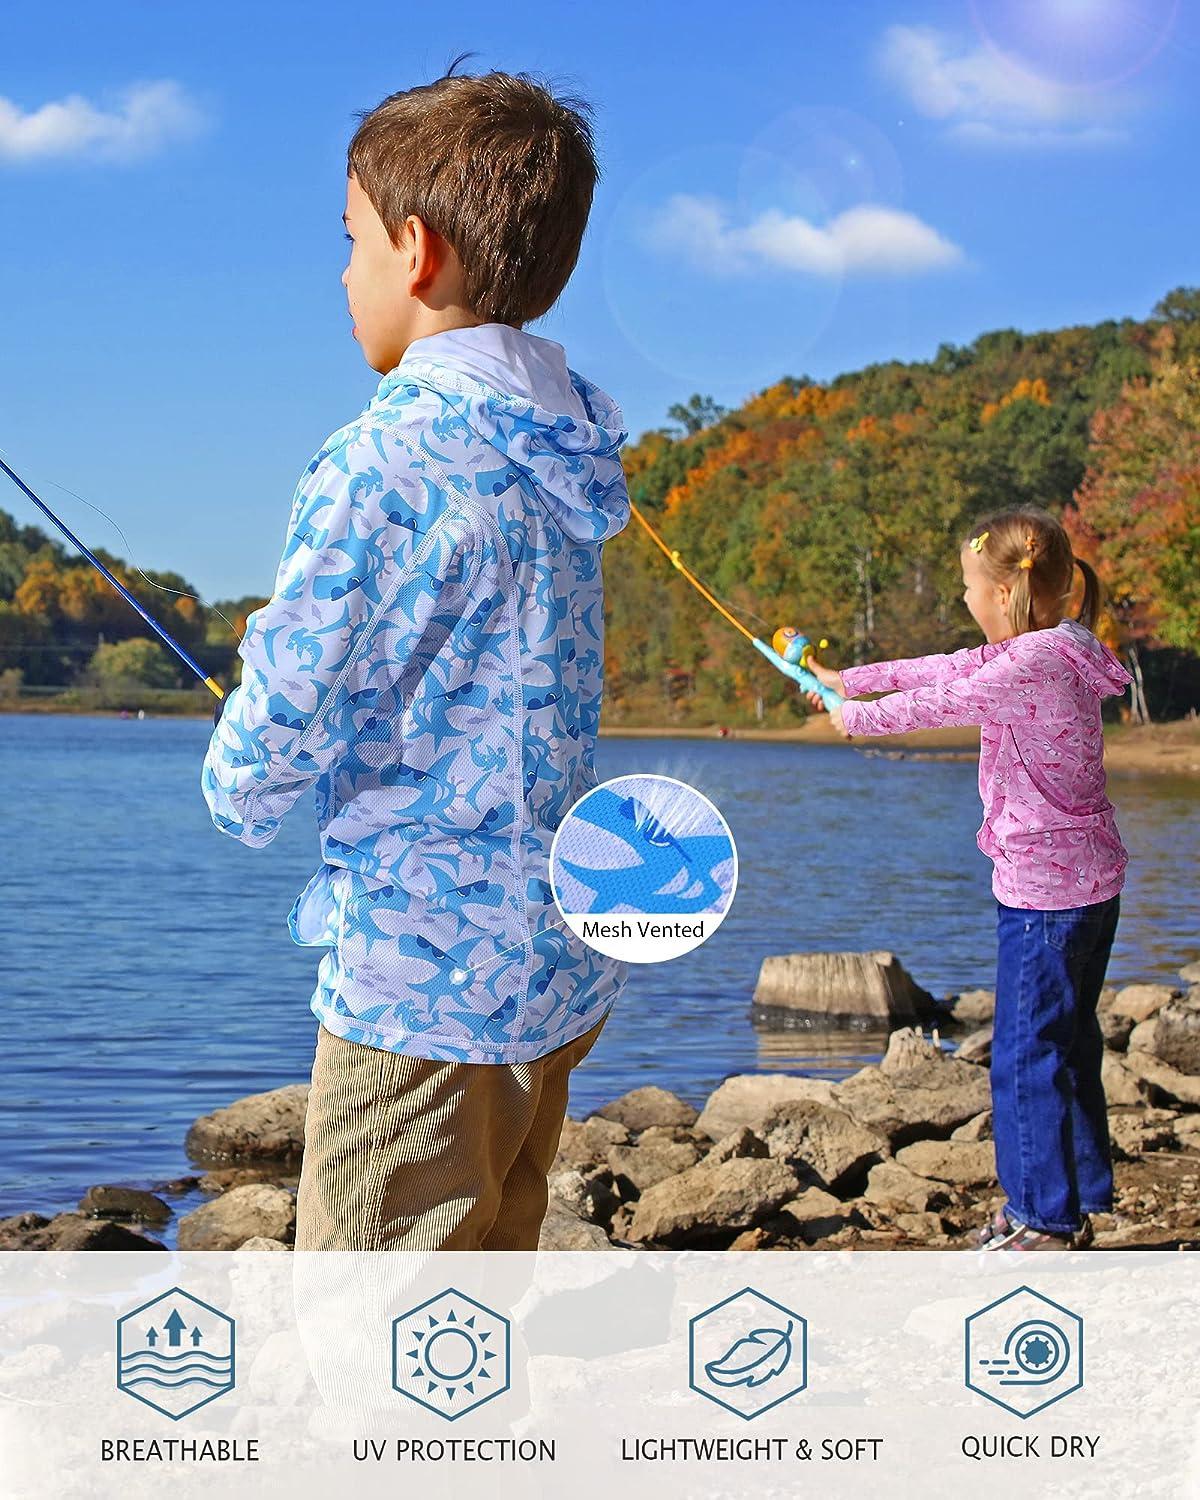  Fishing Shirts for Boys - Fishing Shirt - Kids Fishing